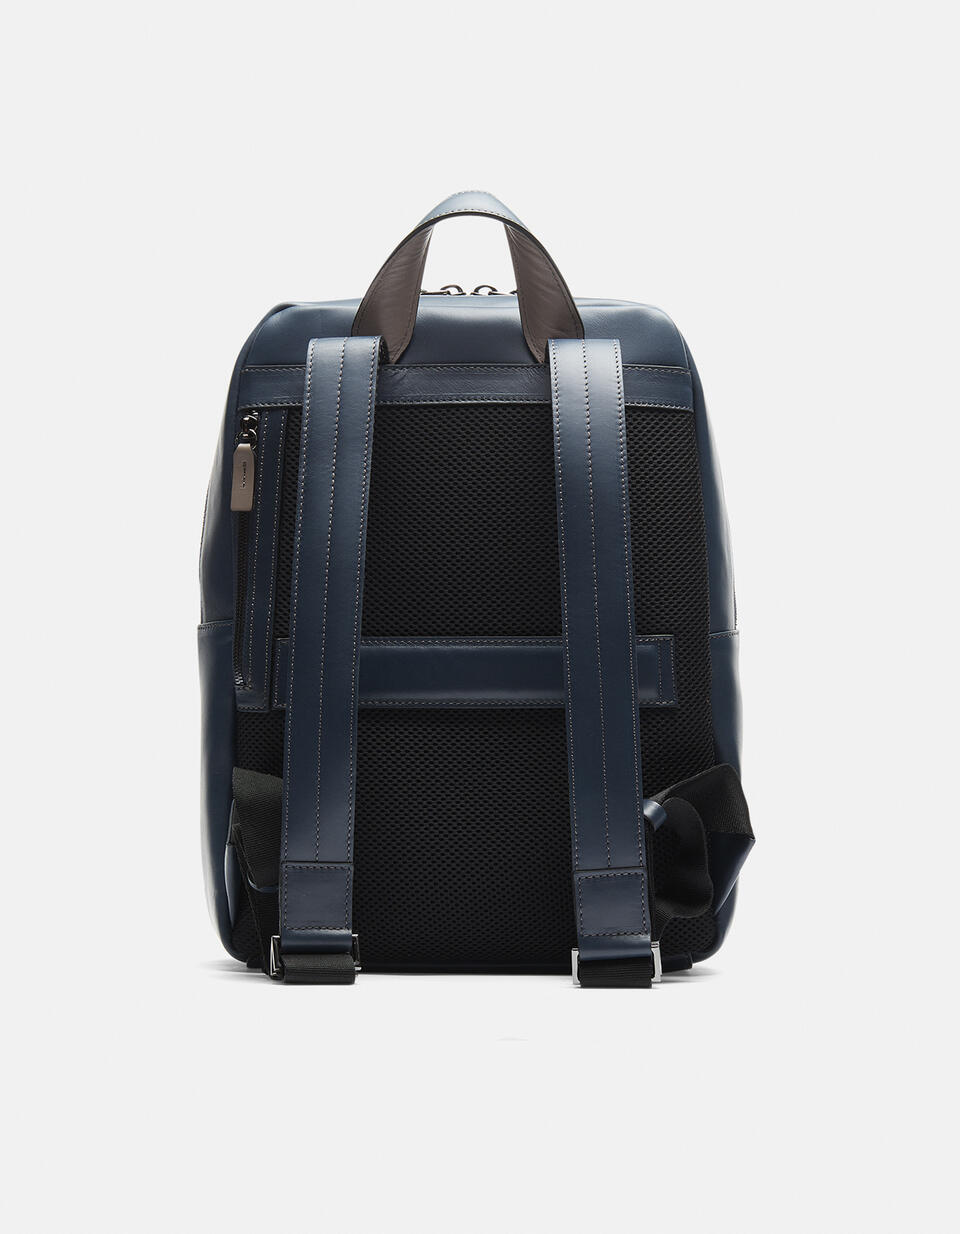 Backpack  - Backpacks - Men's Bags - Bags - Cuoieria Fiorentina